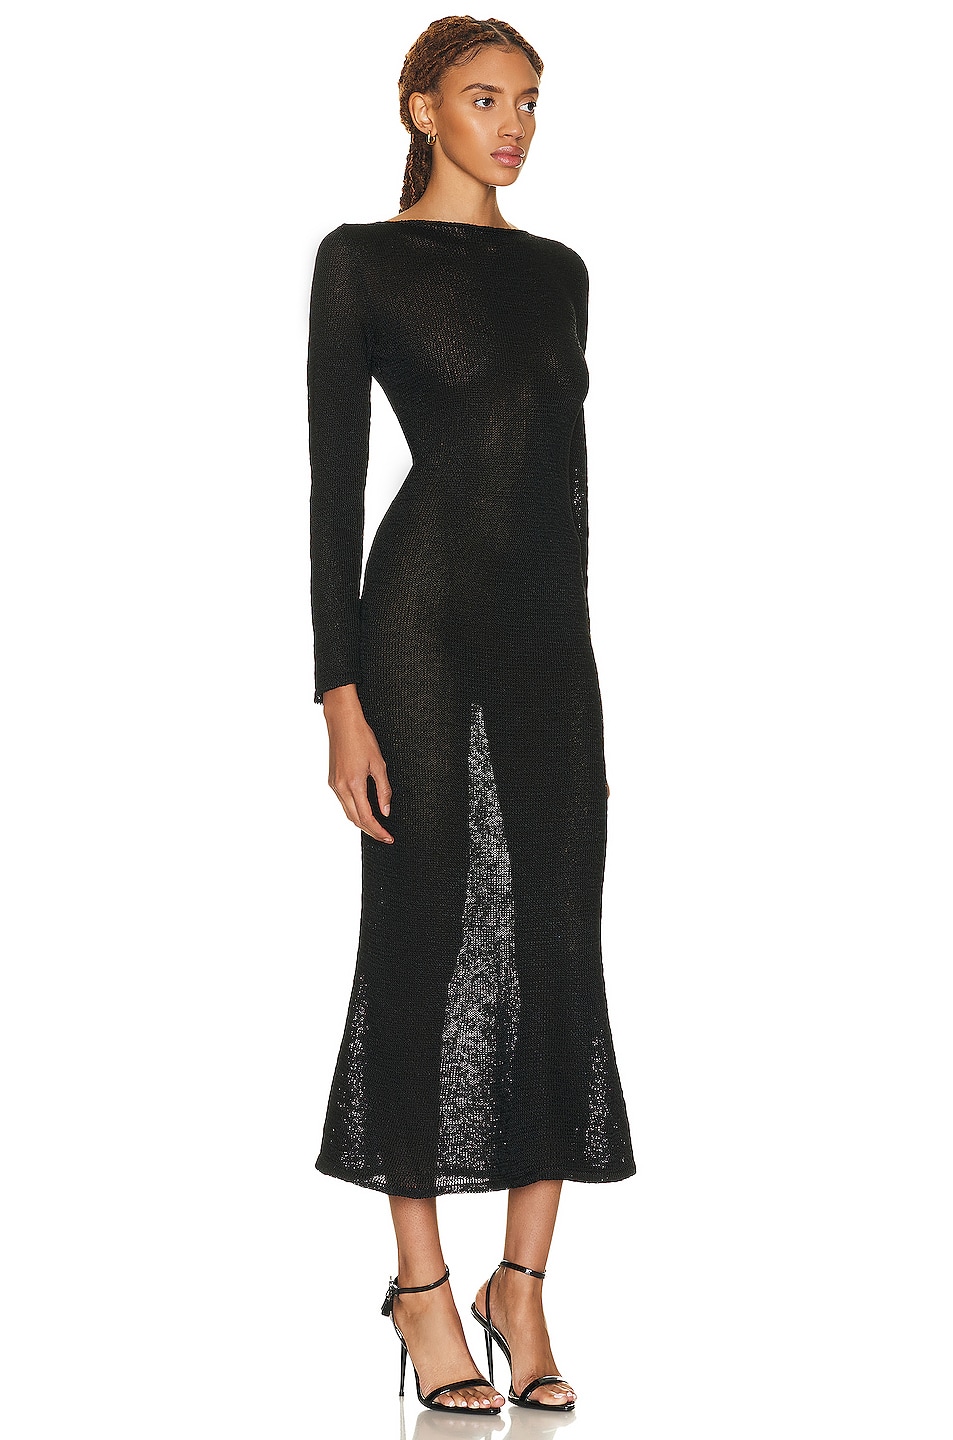 TOM FORD Shiny Long Sleeve Dress in Black | FWRD